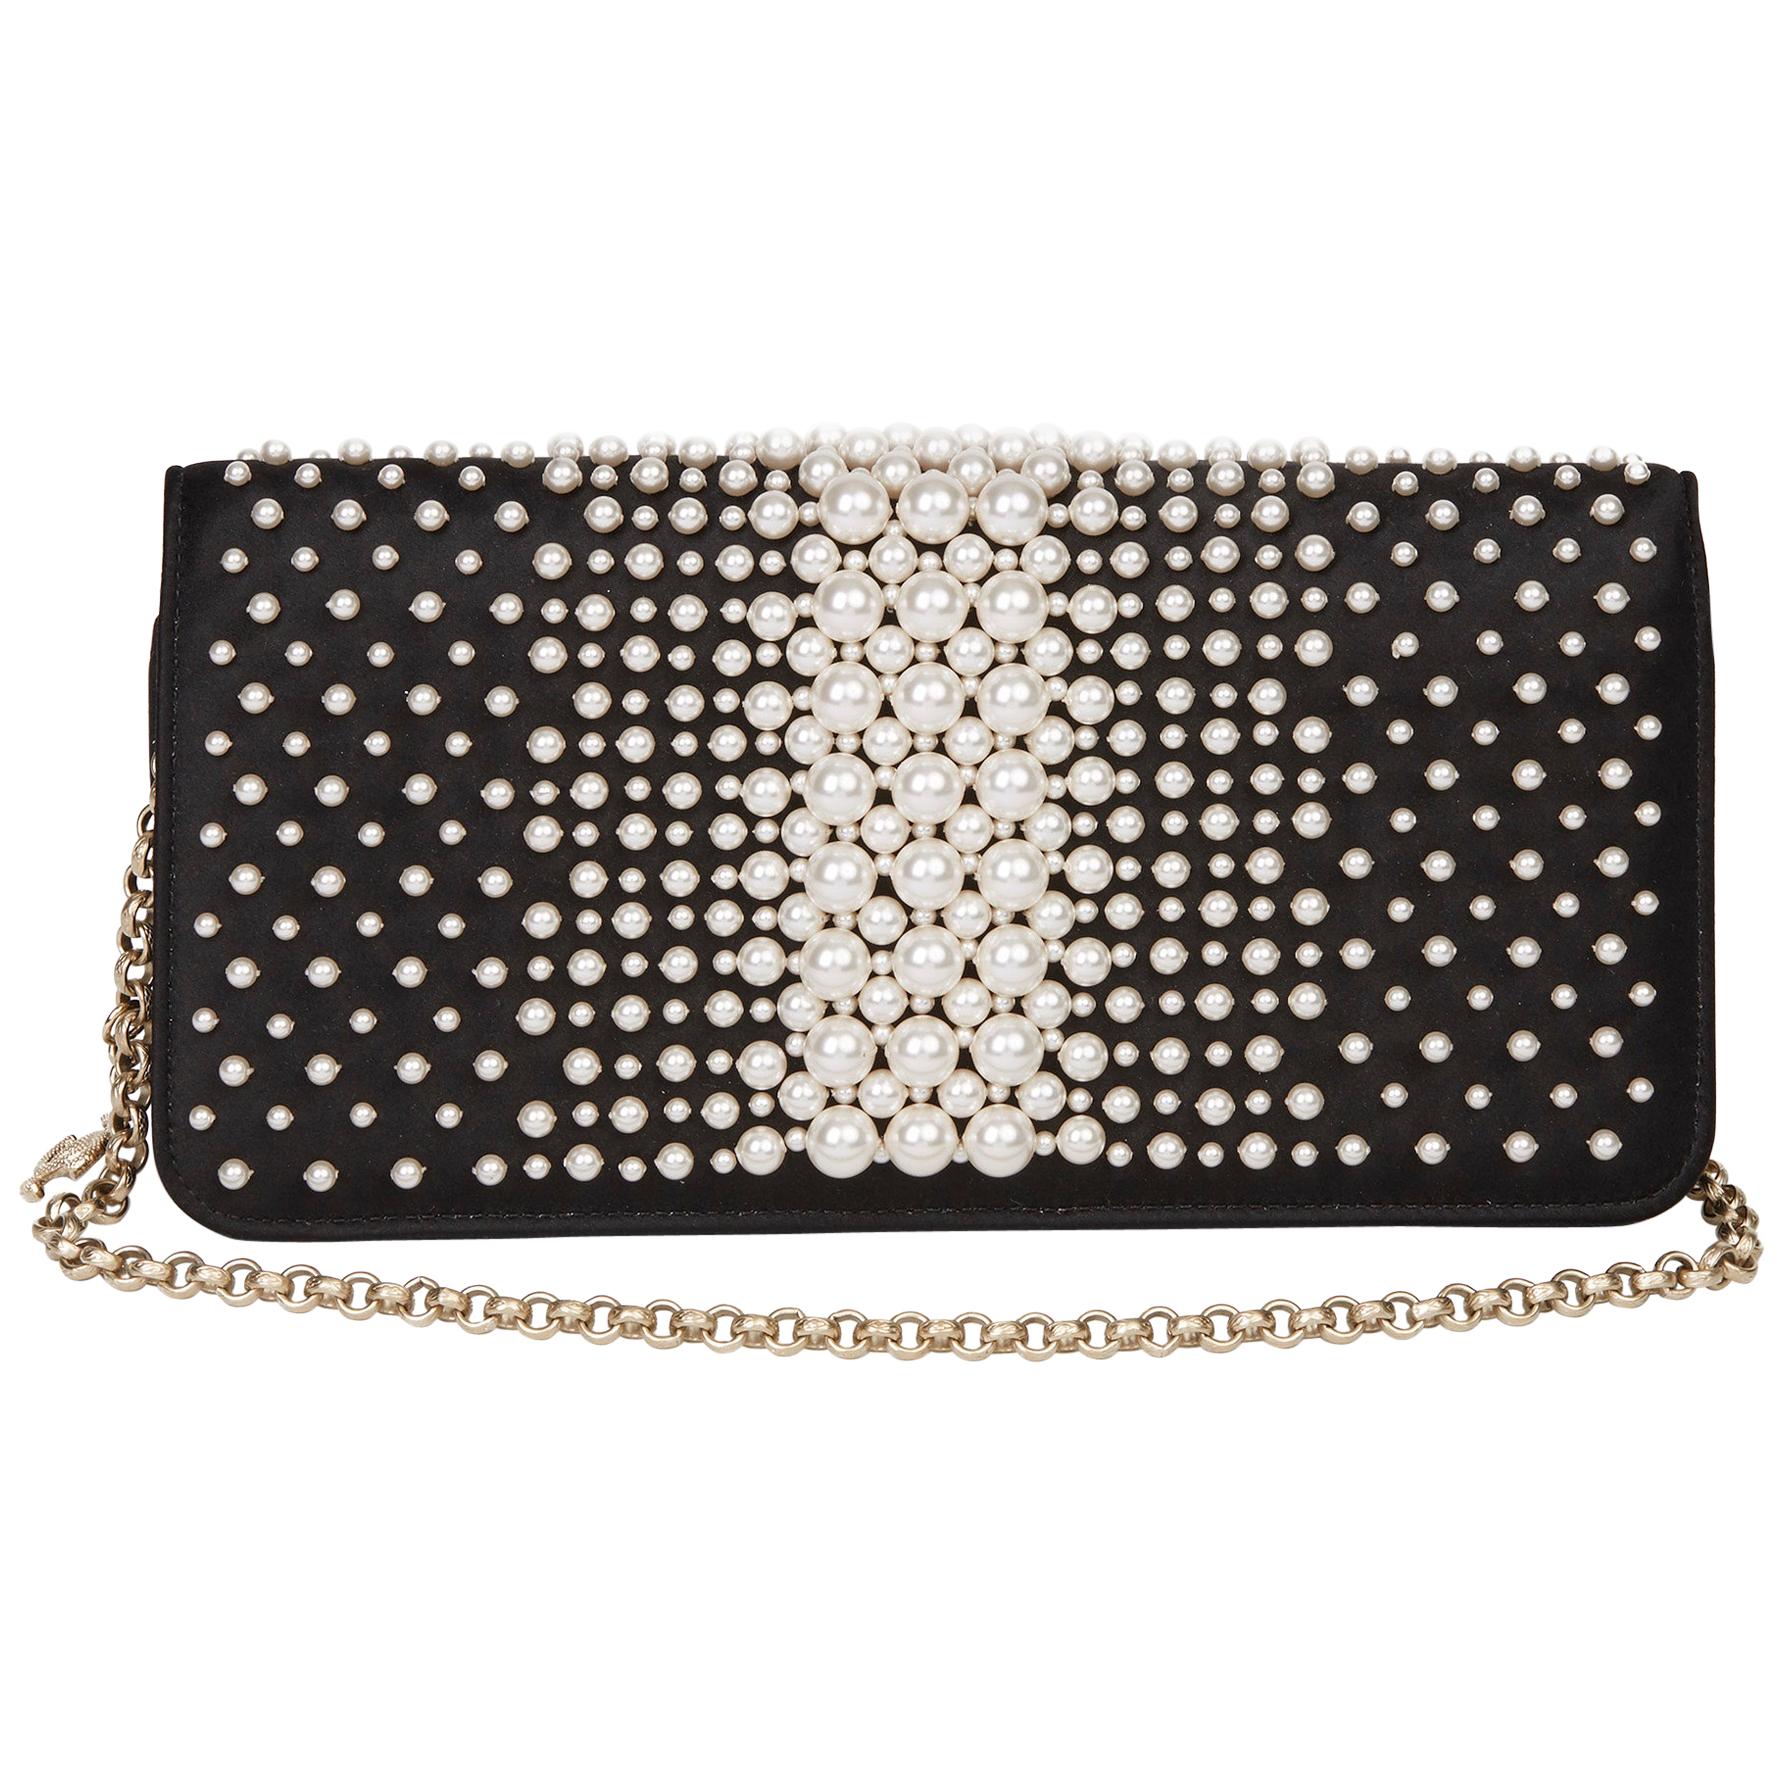 2016 Chanel Black Embellished Quilted Satin Pearl Flap Bag